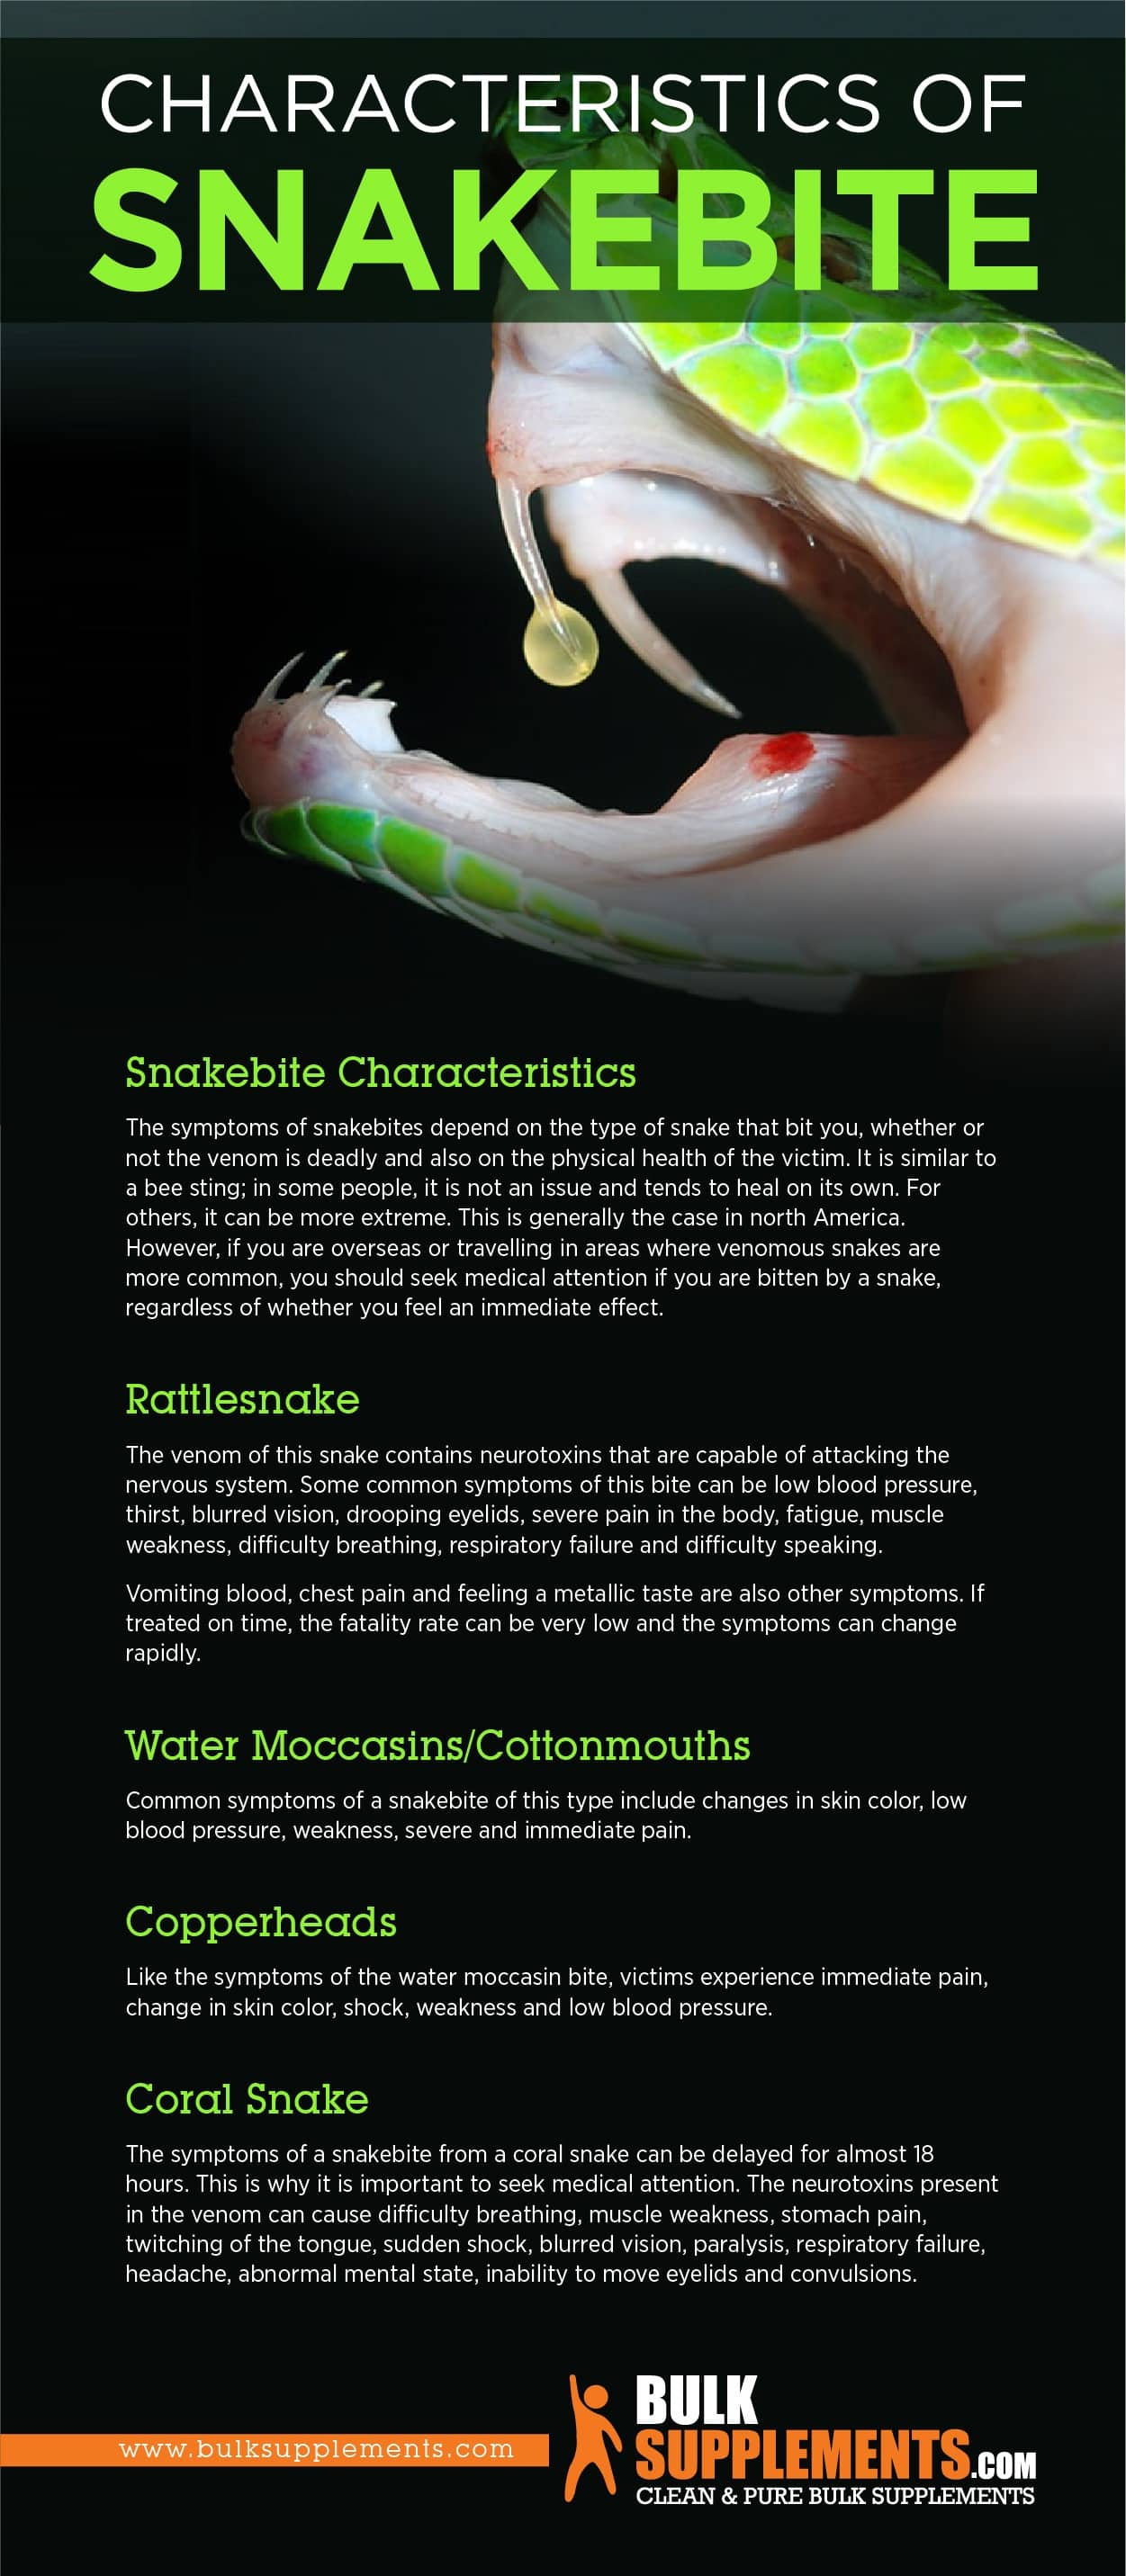 Snakebite Characteristics